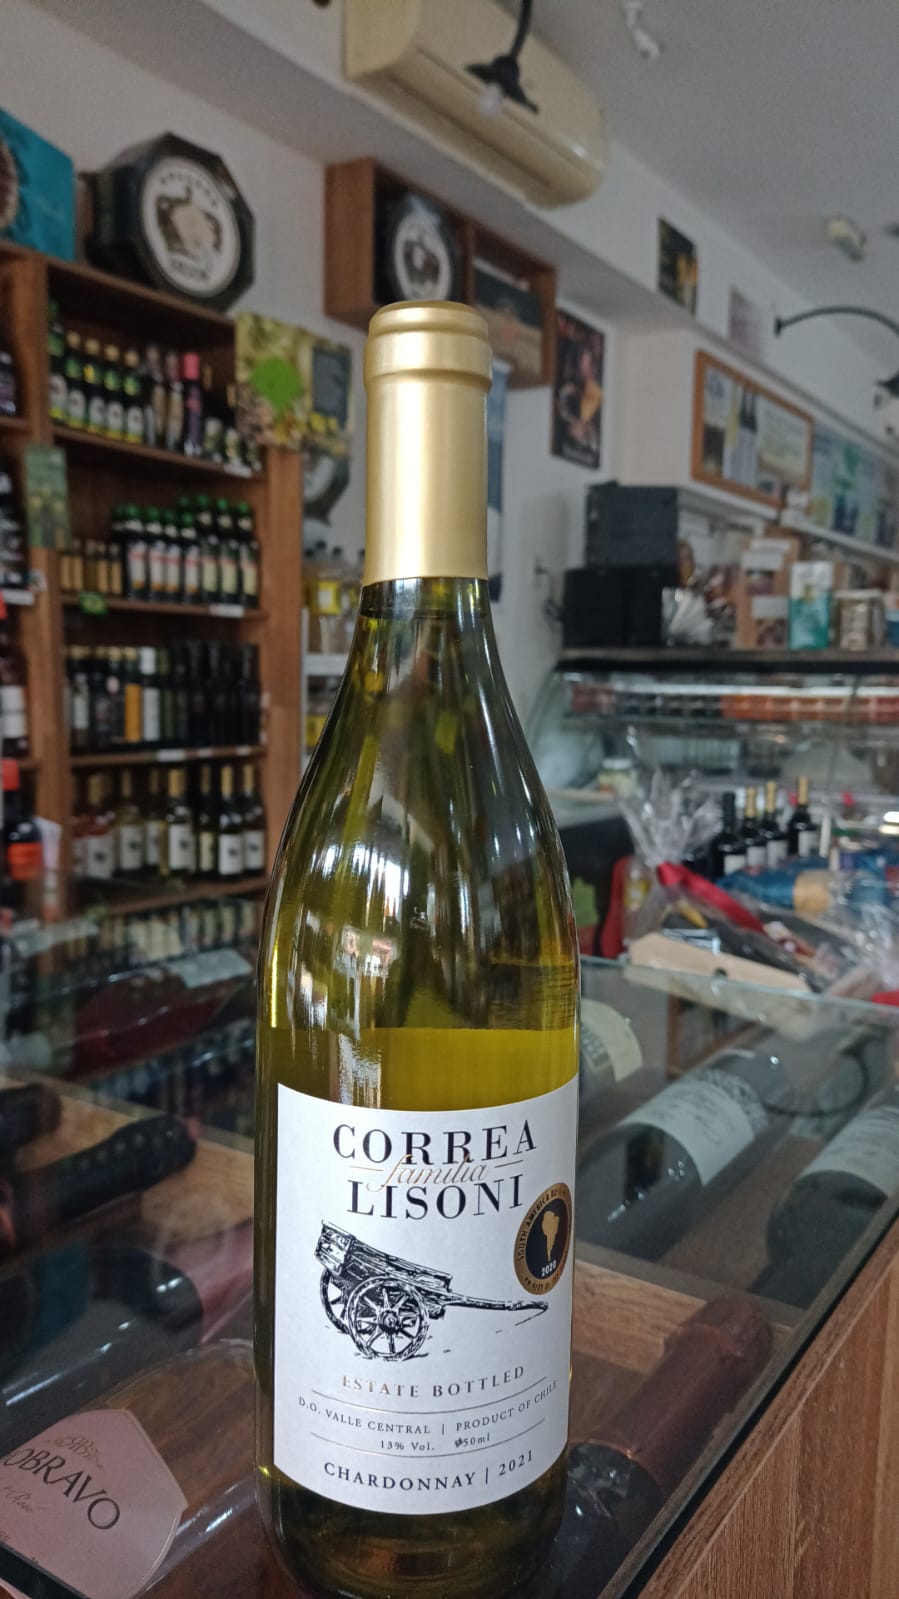 Correa Lisoni Chardonnay